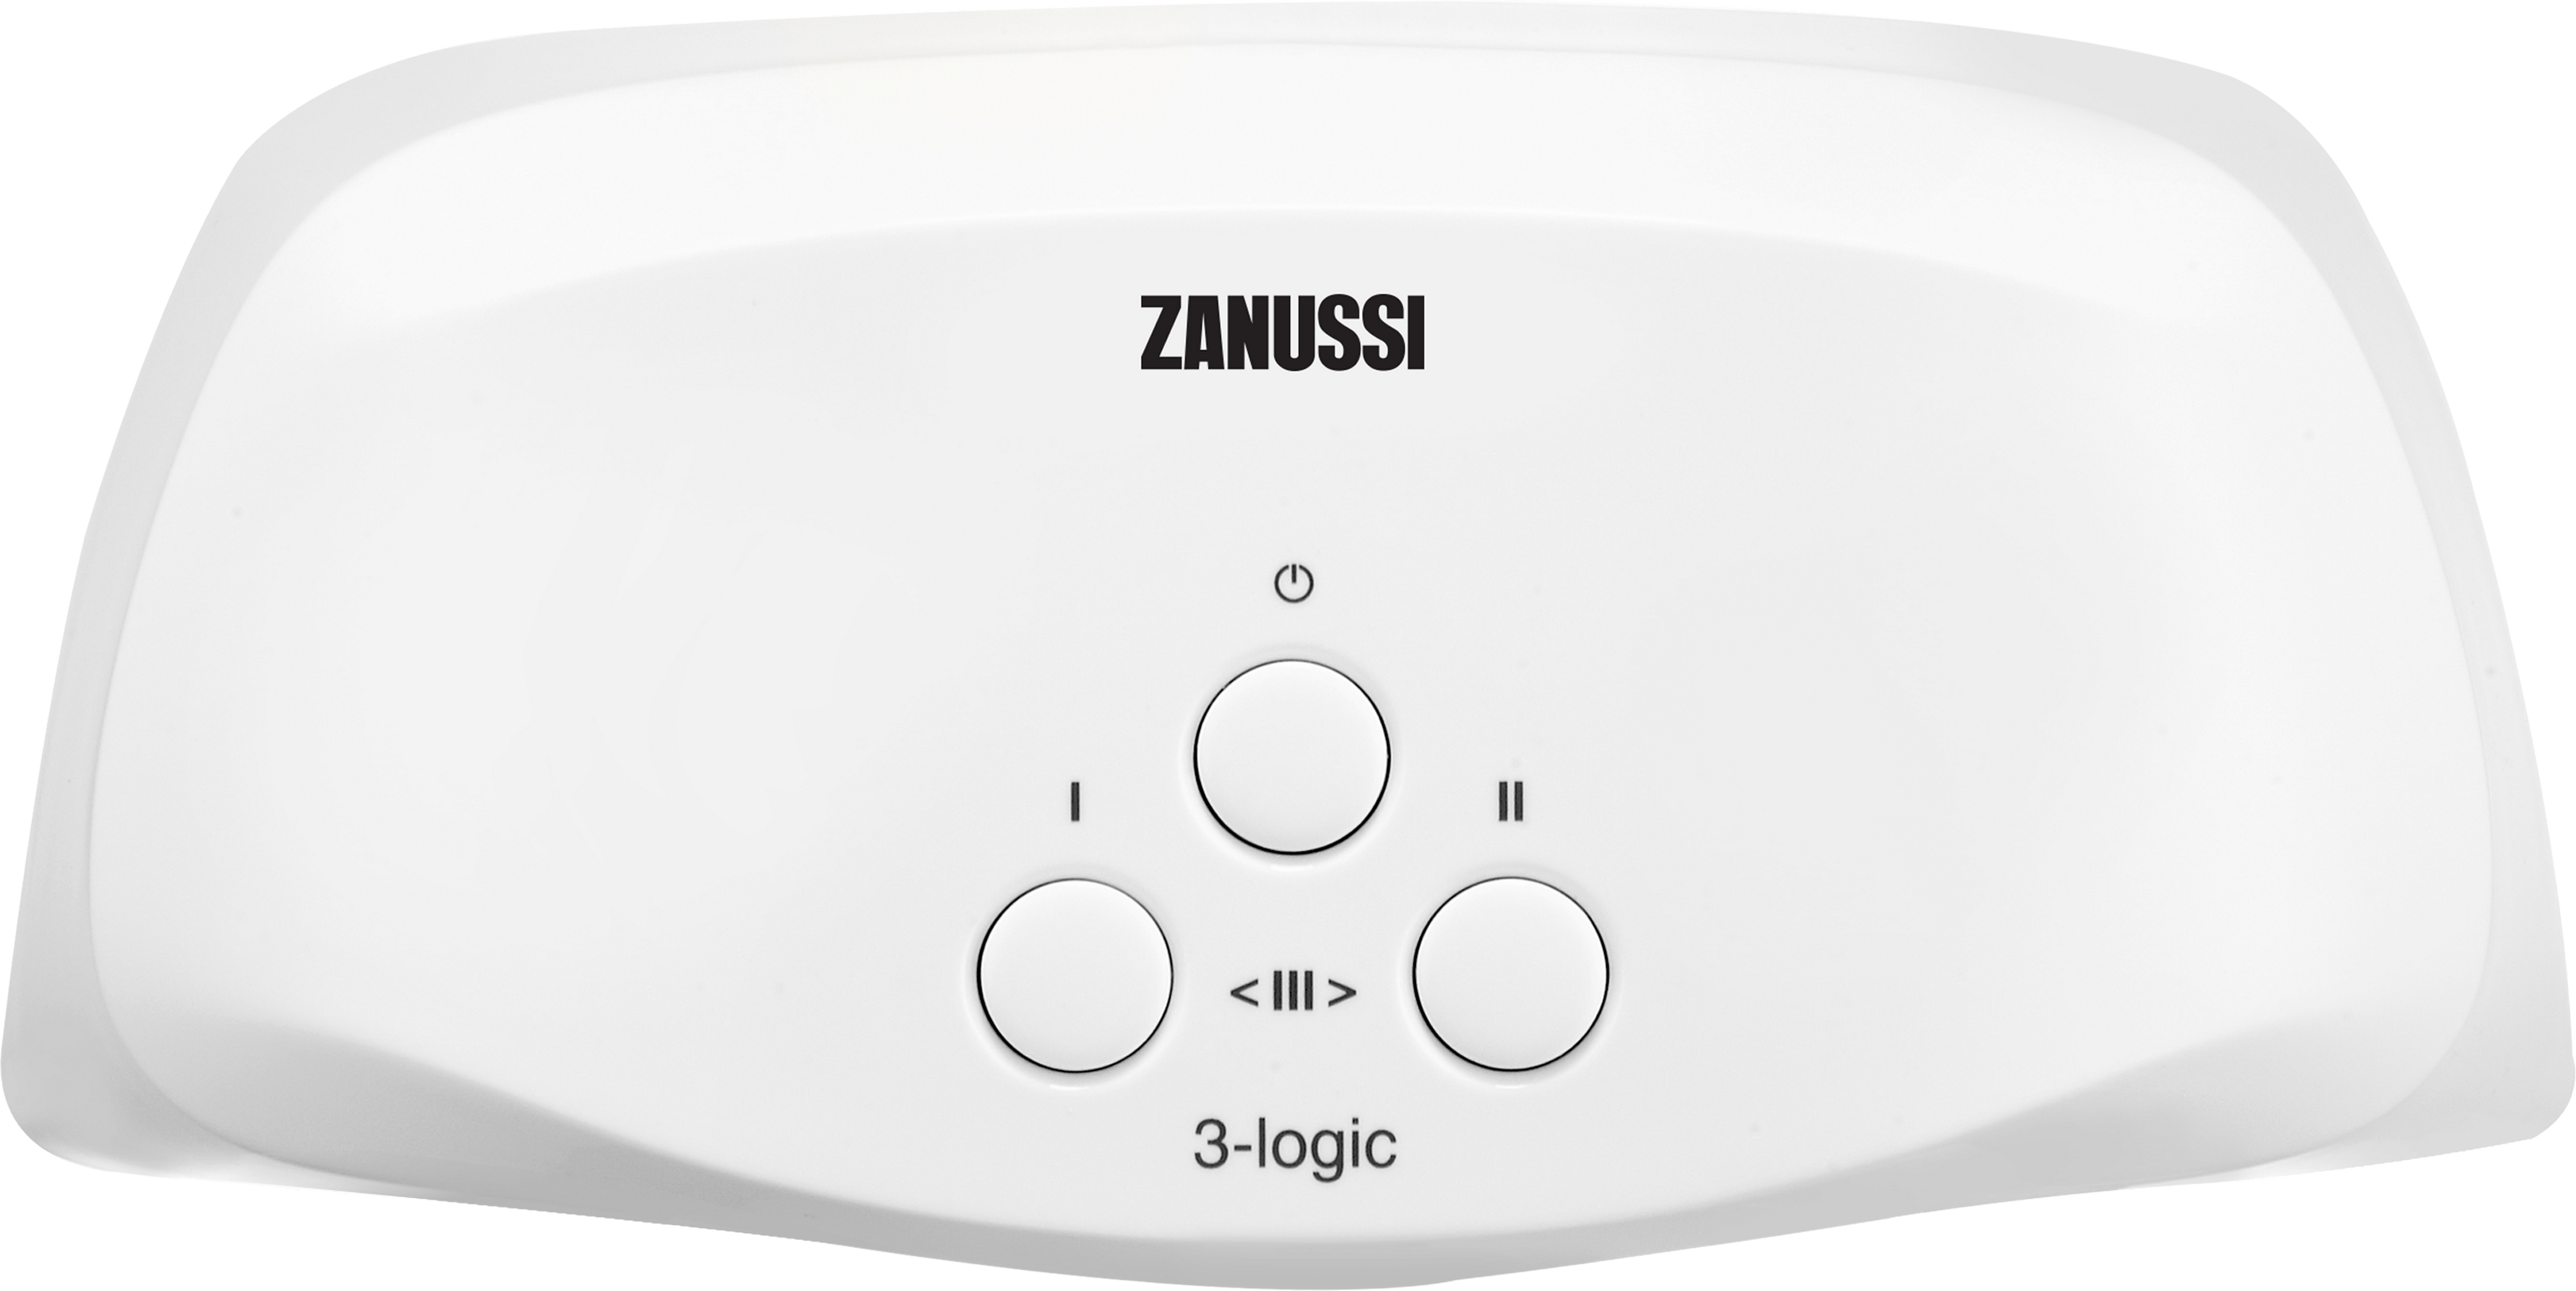 Проточный водонагреватель Zanussi 3-logic TS (3,5 кВт) в Днепре